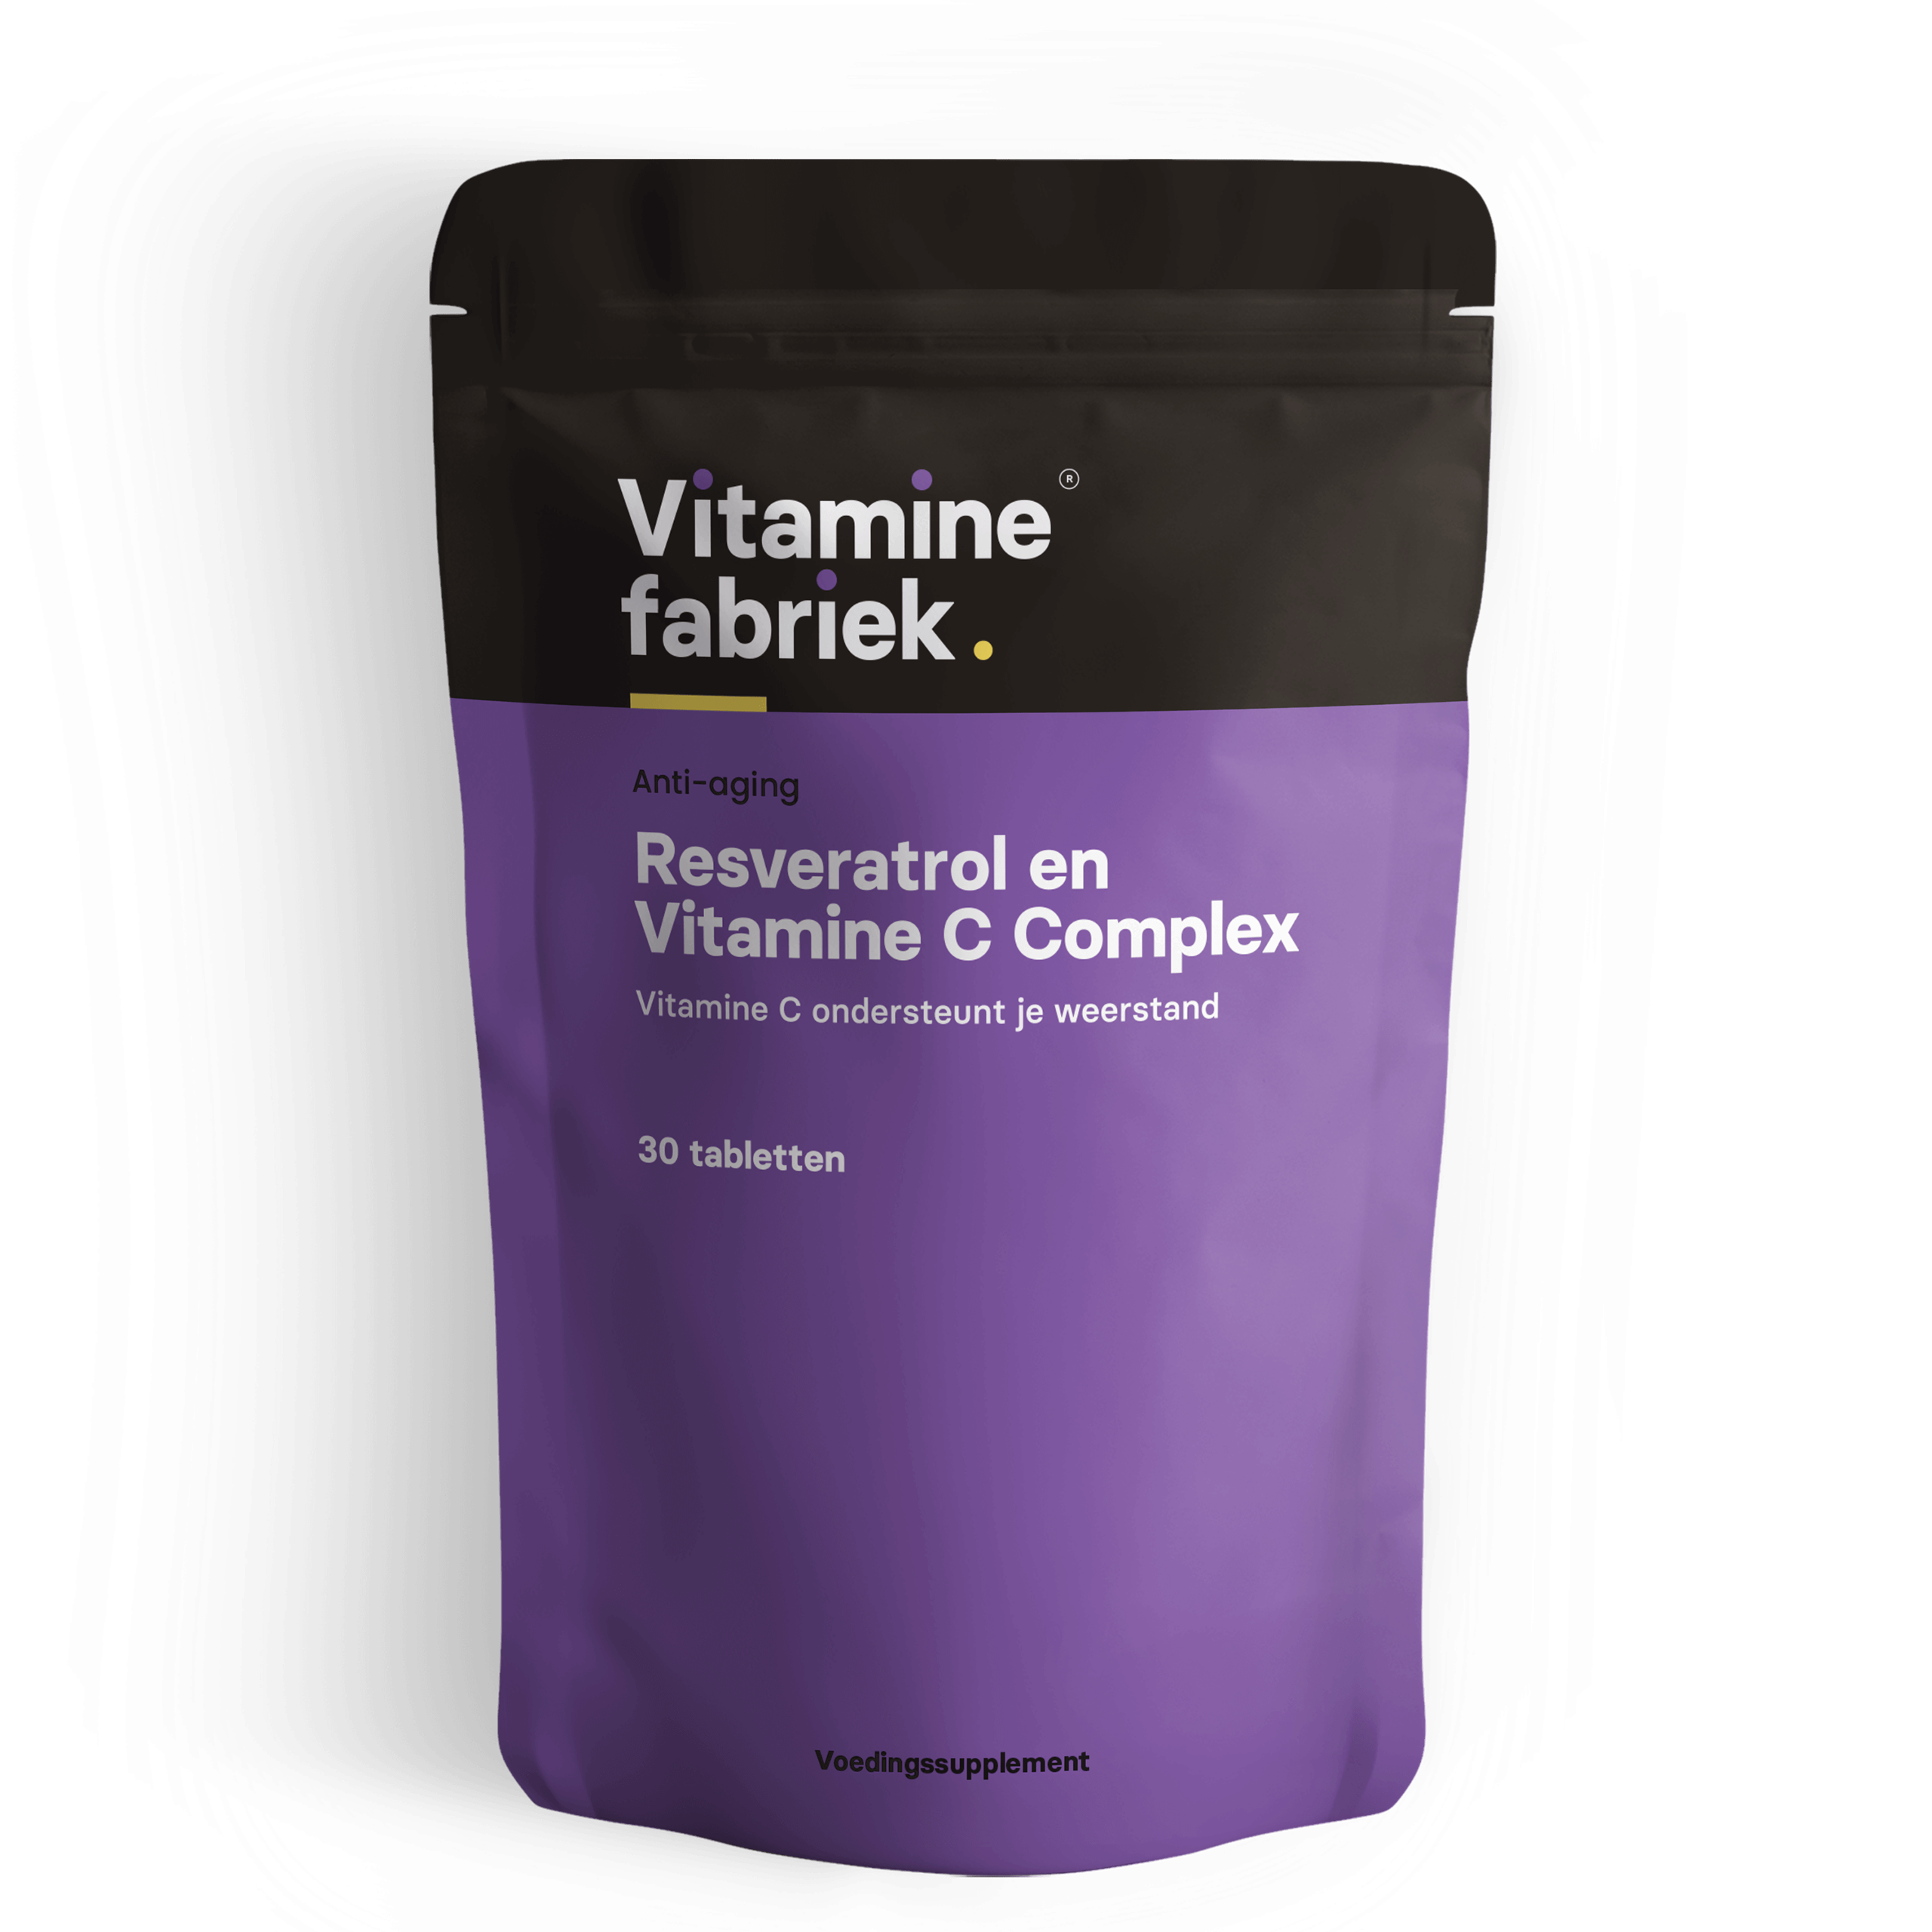 Resveratrol en Vitamine C Complex - 30 tabletten - Vitaminefabriek.nl